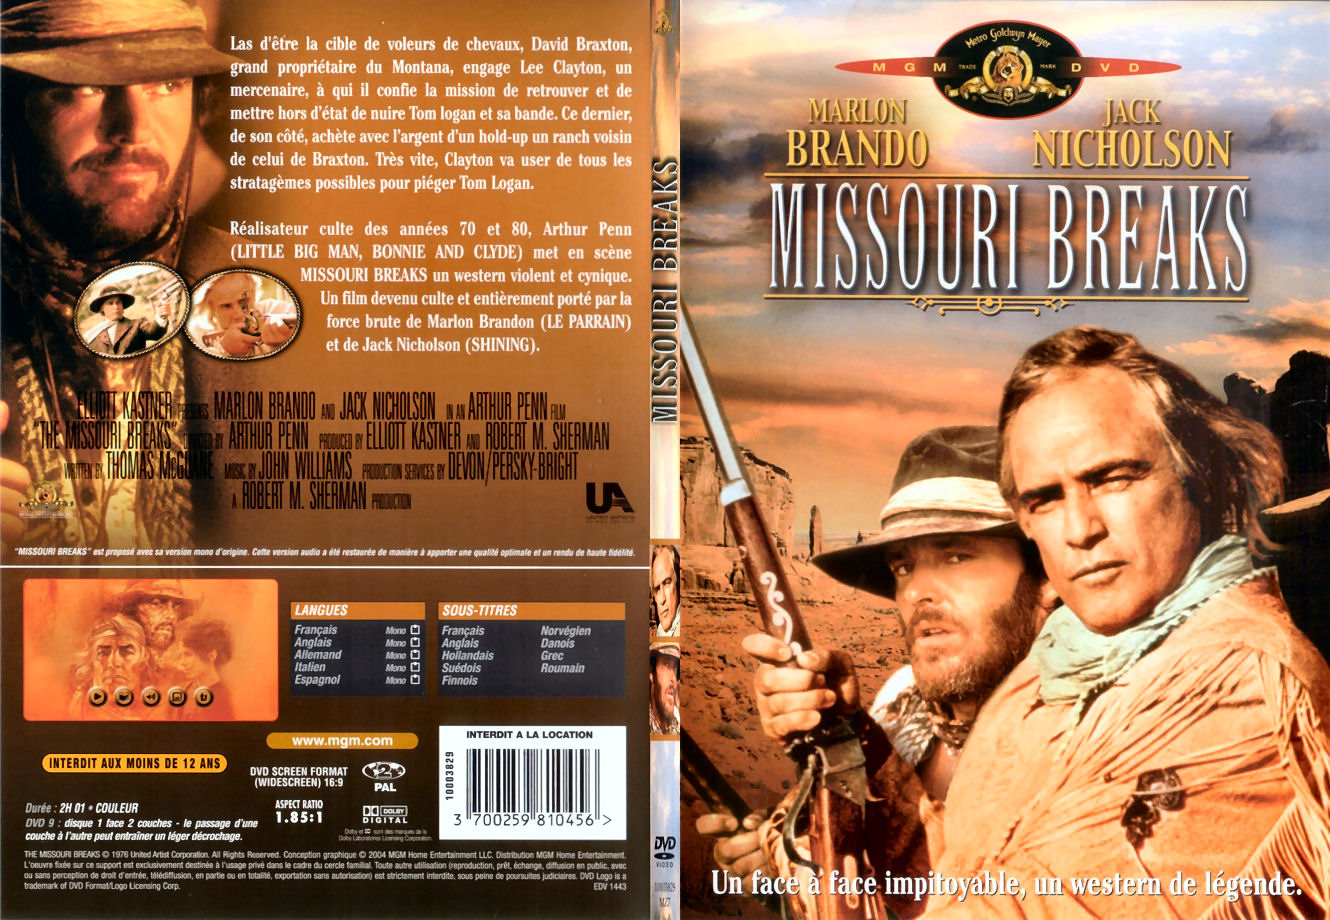 Jaquette DVD Missouri breaks - SLIM